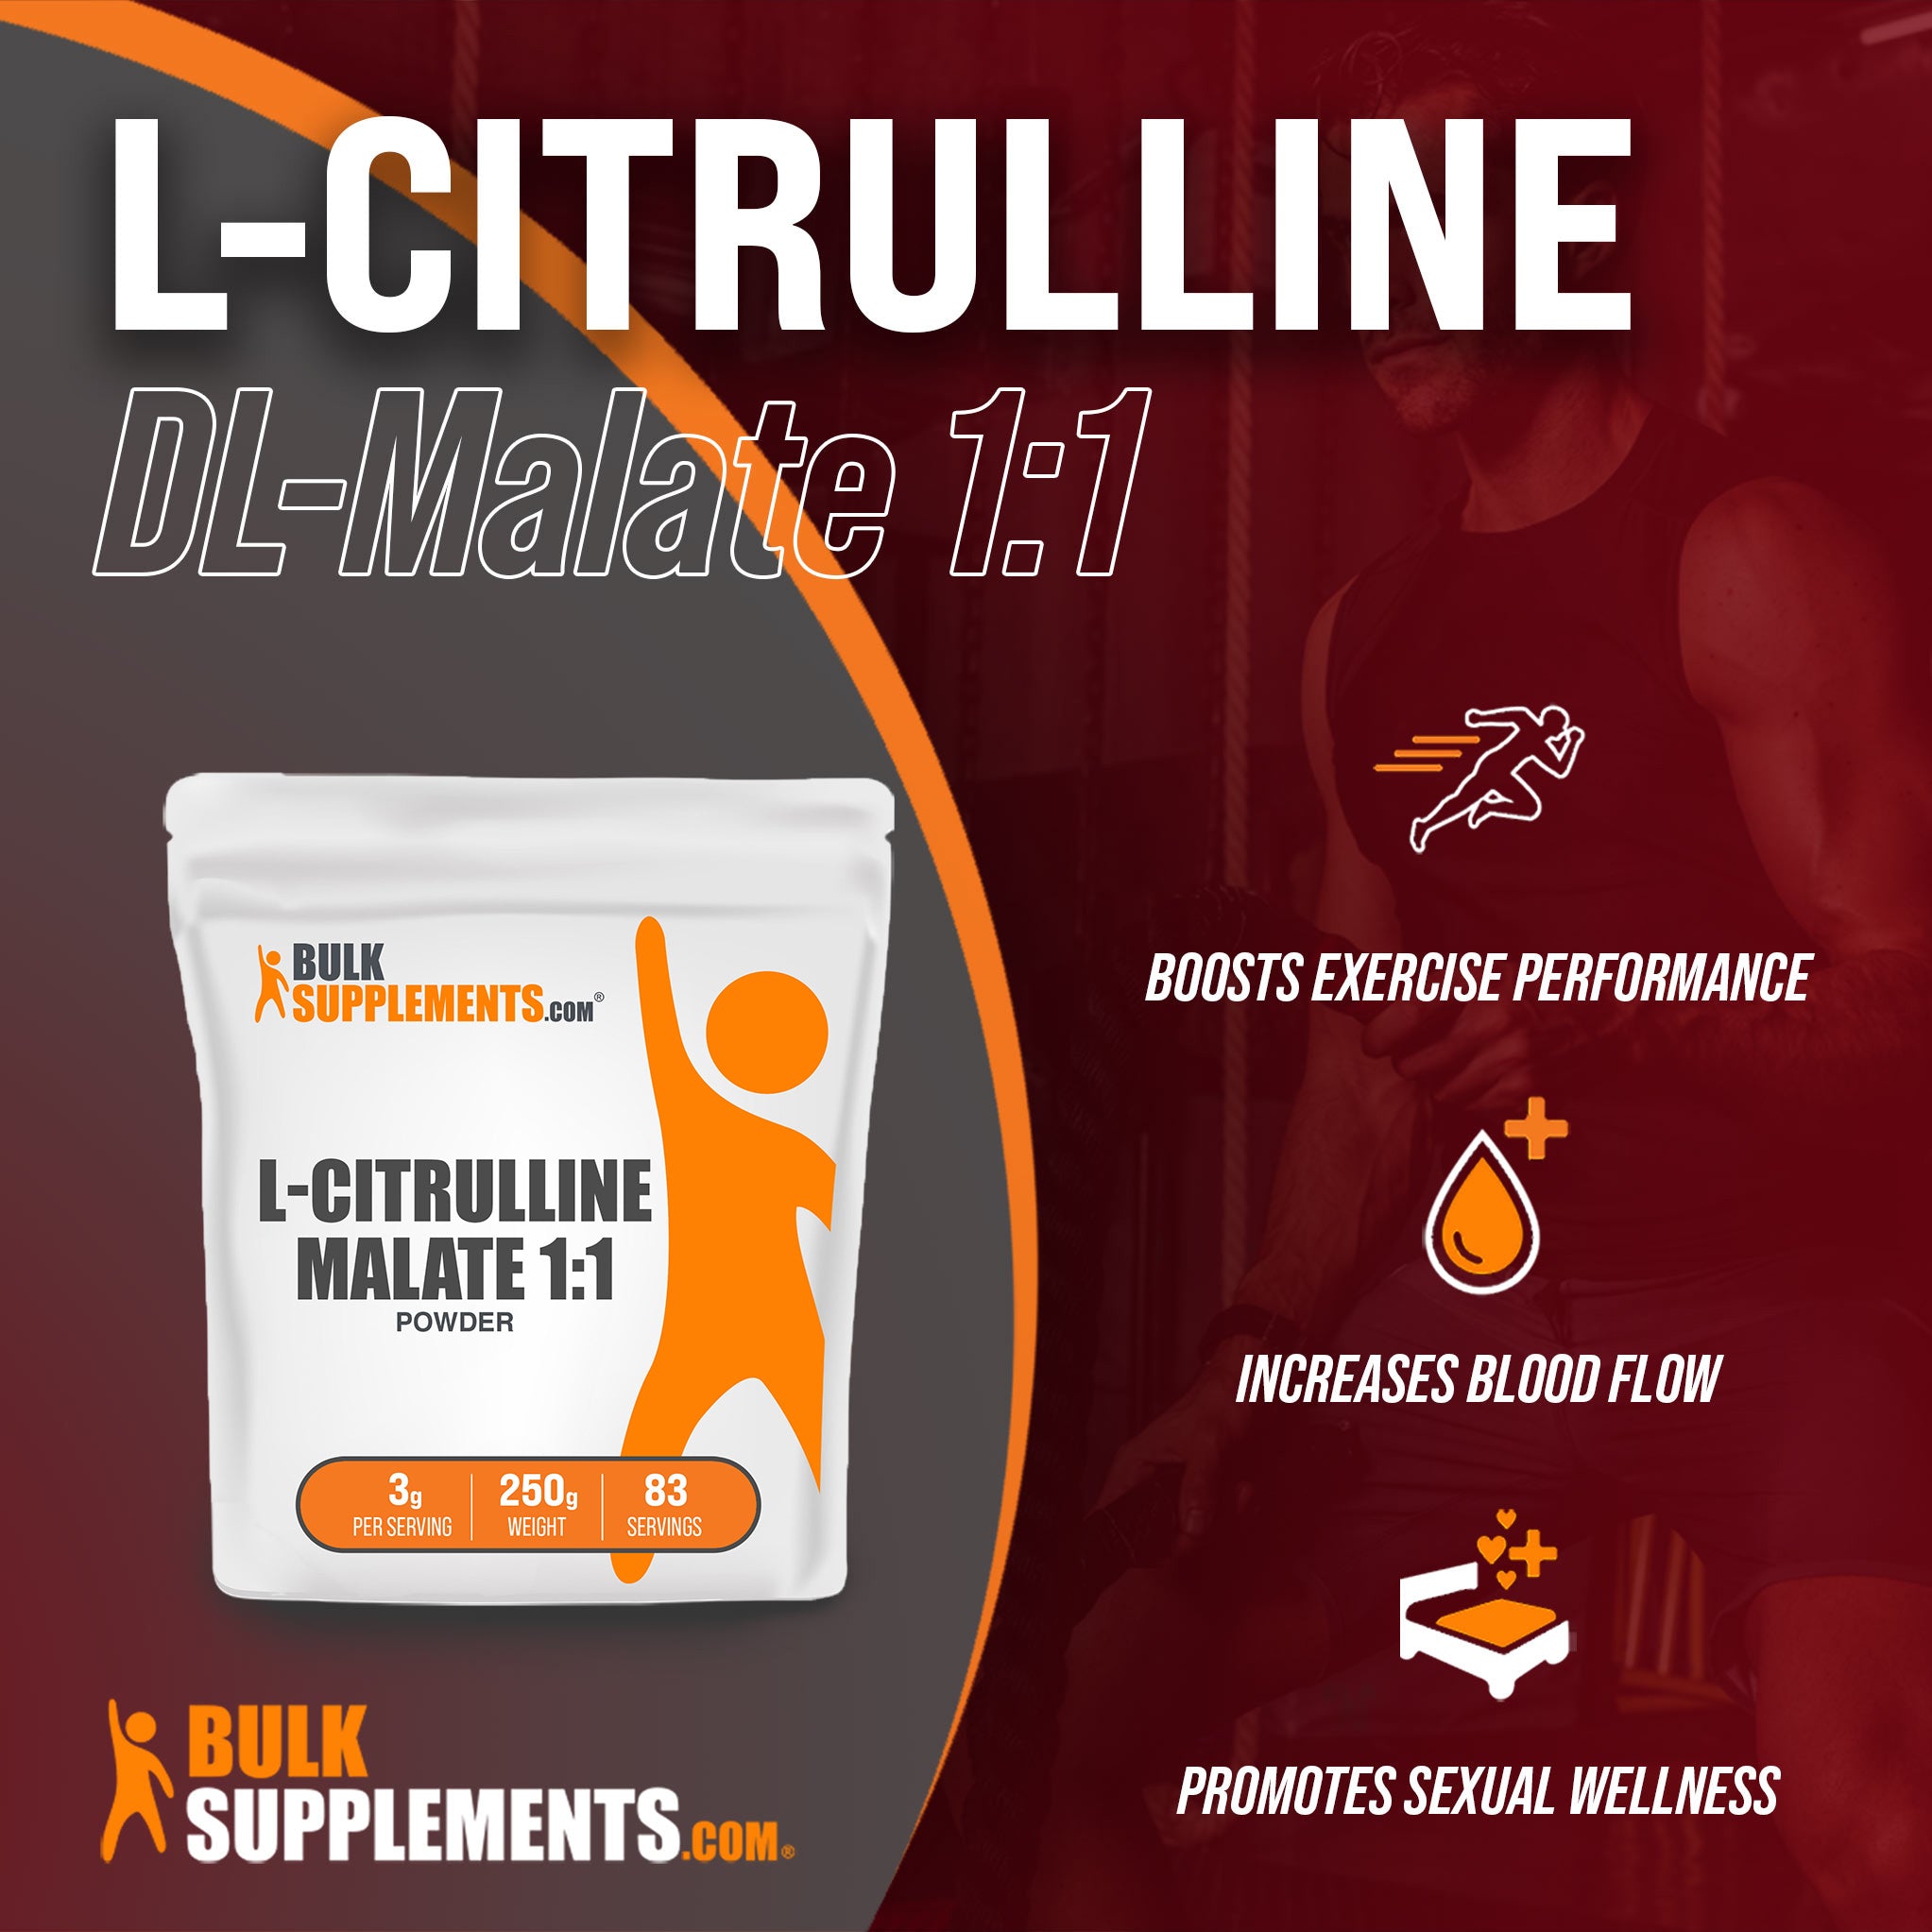 L-Citrulline DL-Malate 1:1 from Bulk Supplements